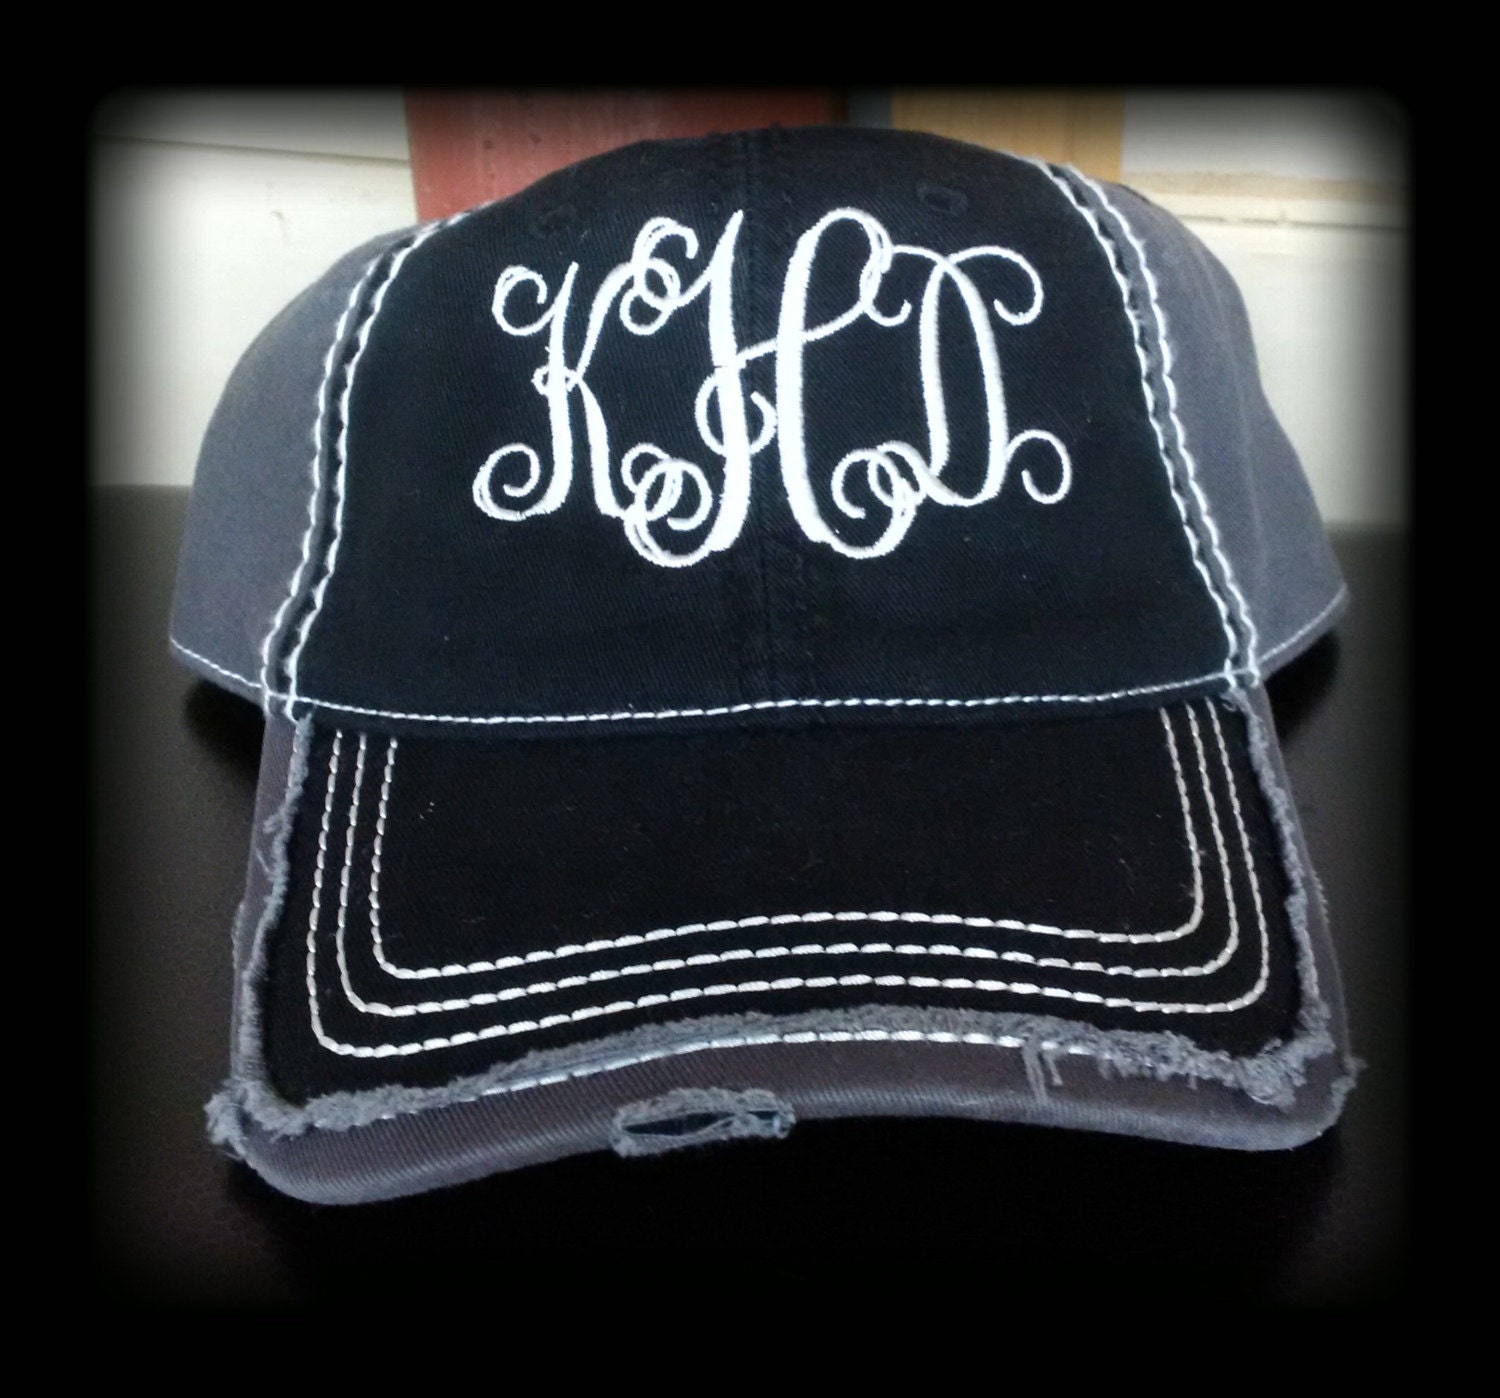 Monogram custom designed embroidered distressed ball cap.